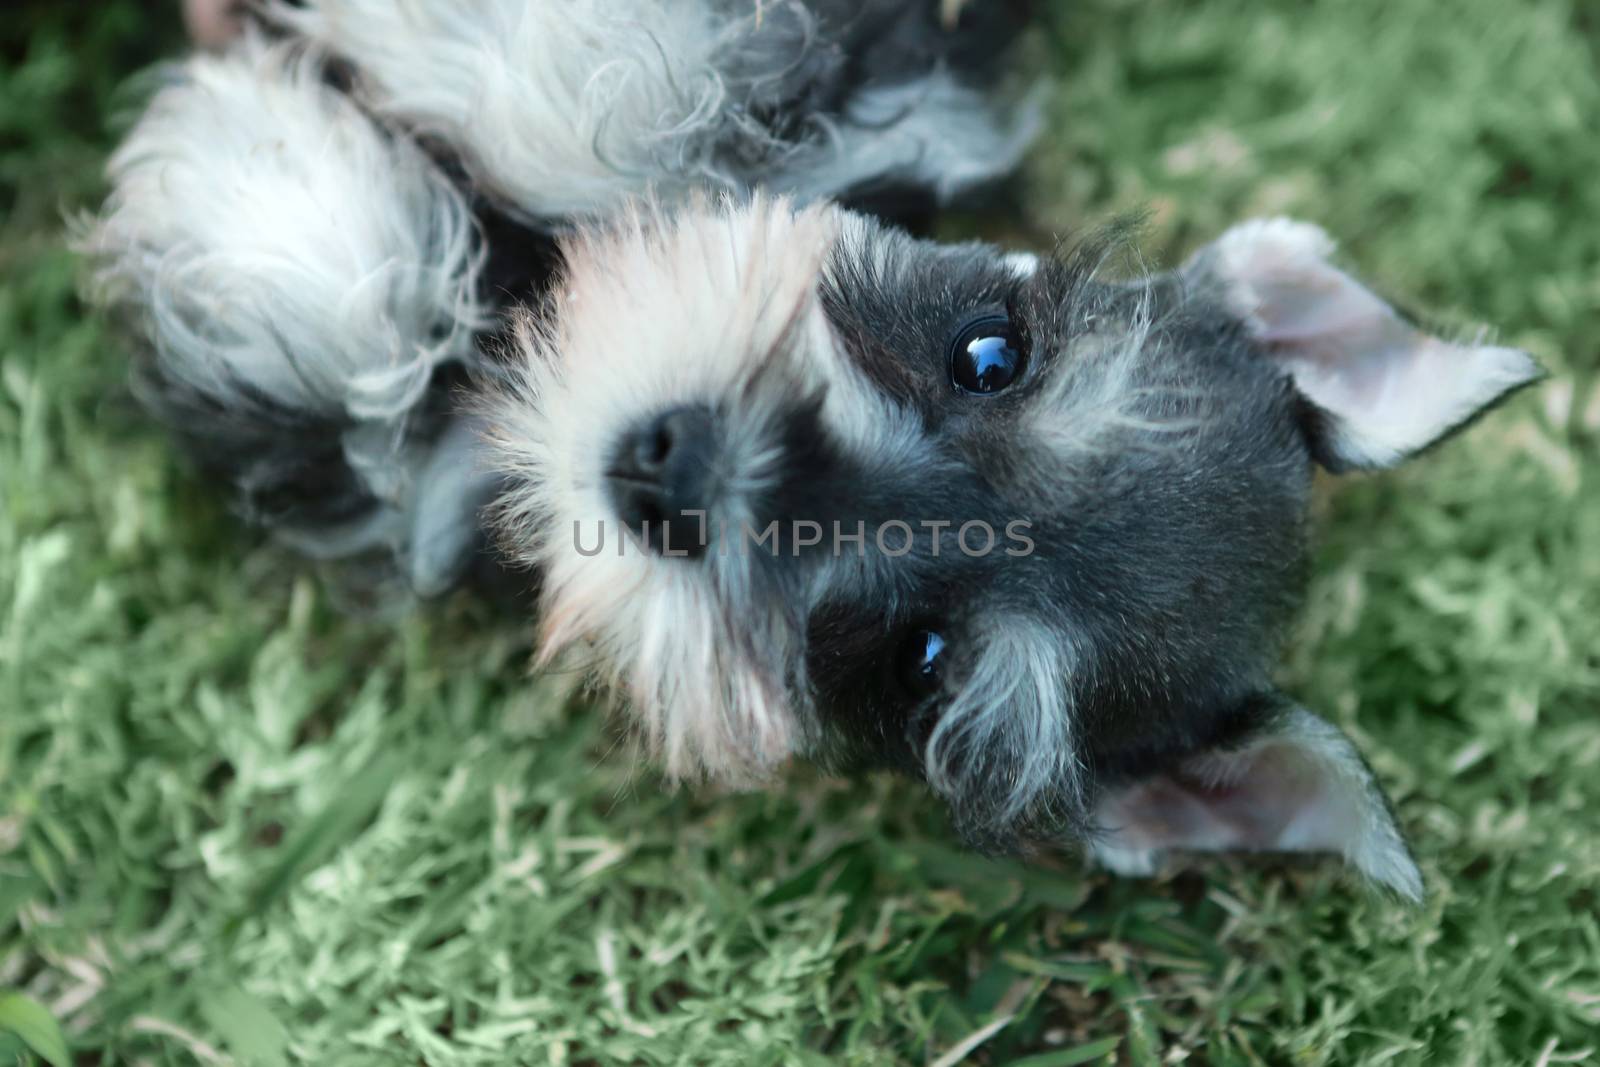 Adorable Miniature Schnauzer Puppy Outdoors